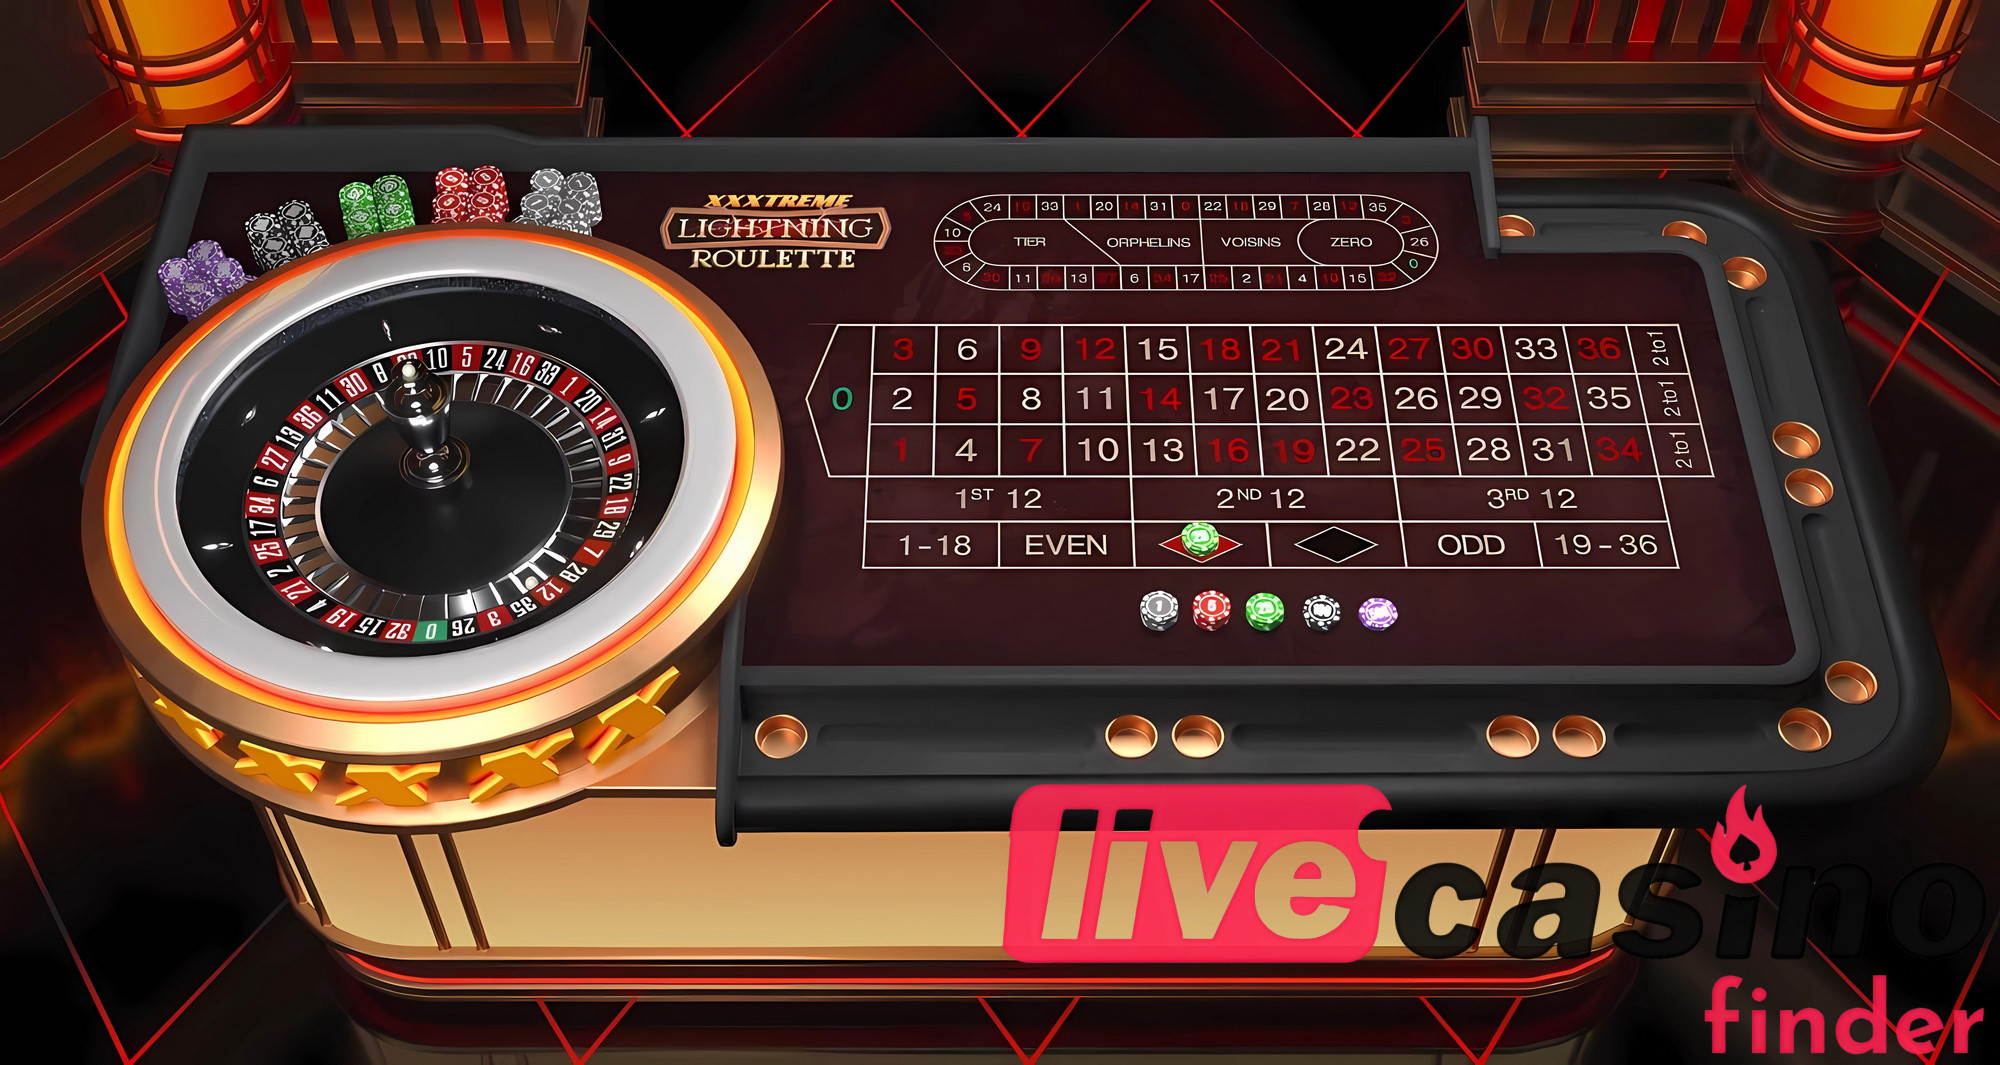 Canlı Casino Oyunu XXXtreme Lightning Roulette.